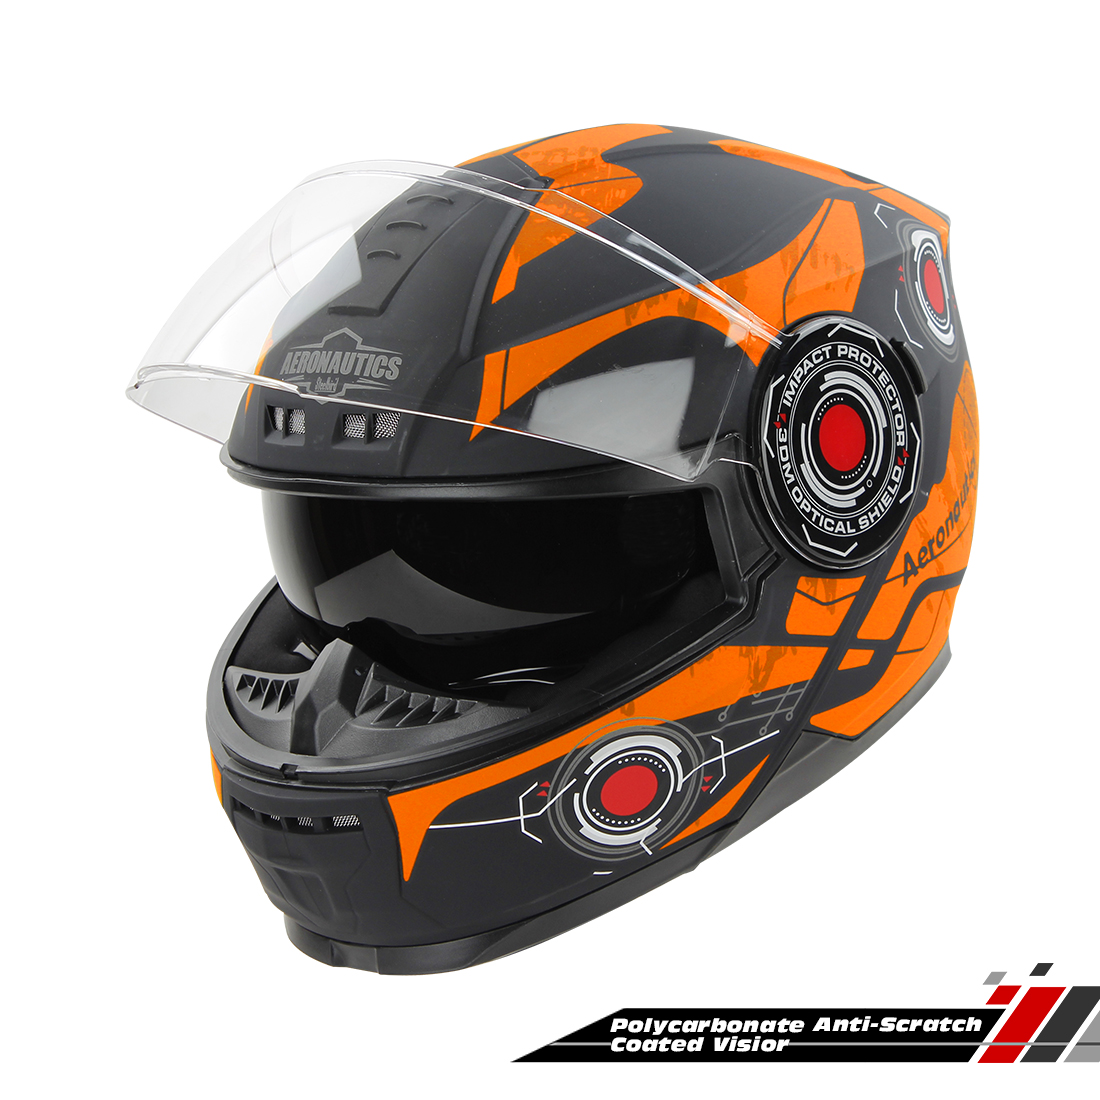 Steelbird SBH-40 Cyber ISI Certified Full Face Graphic Helmet For Men And Women With Inner Sun Shield (Matt Black Orange)